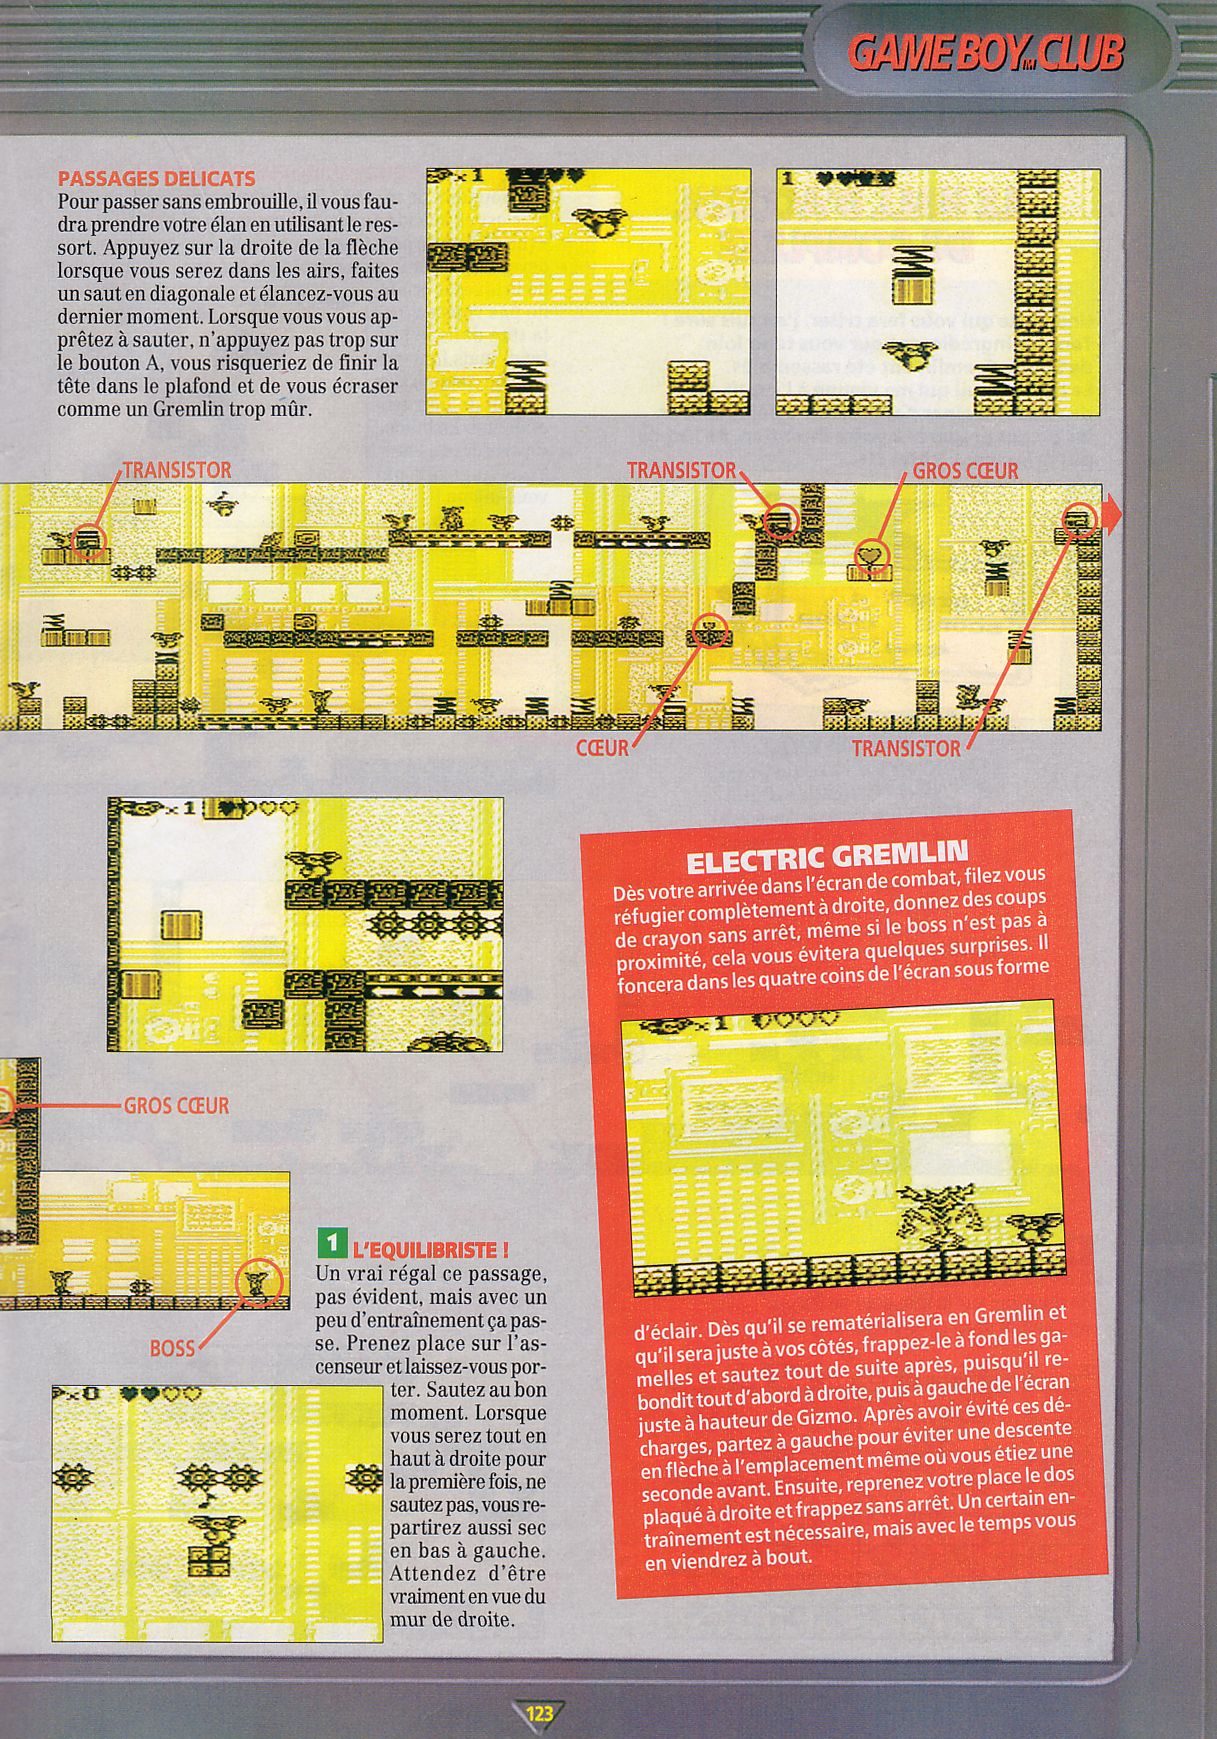 tests//813/Nintendo Player 007 - Page 123 (1992-11-12).jpg